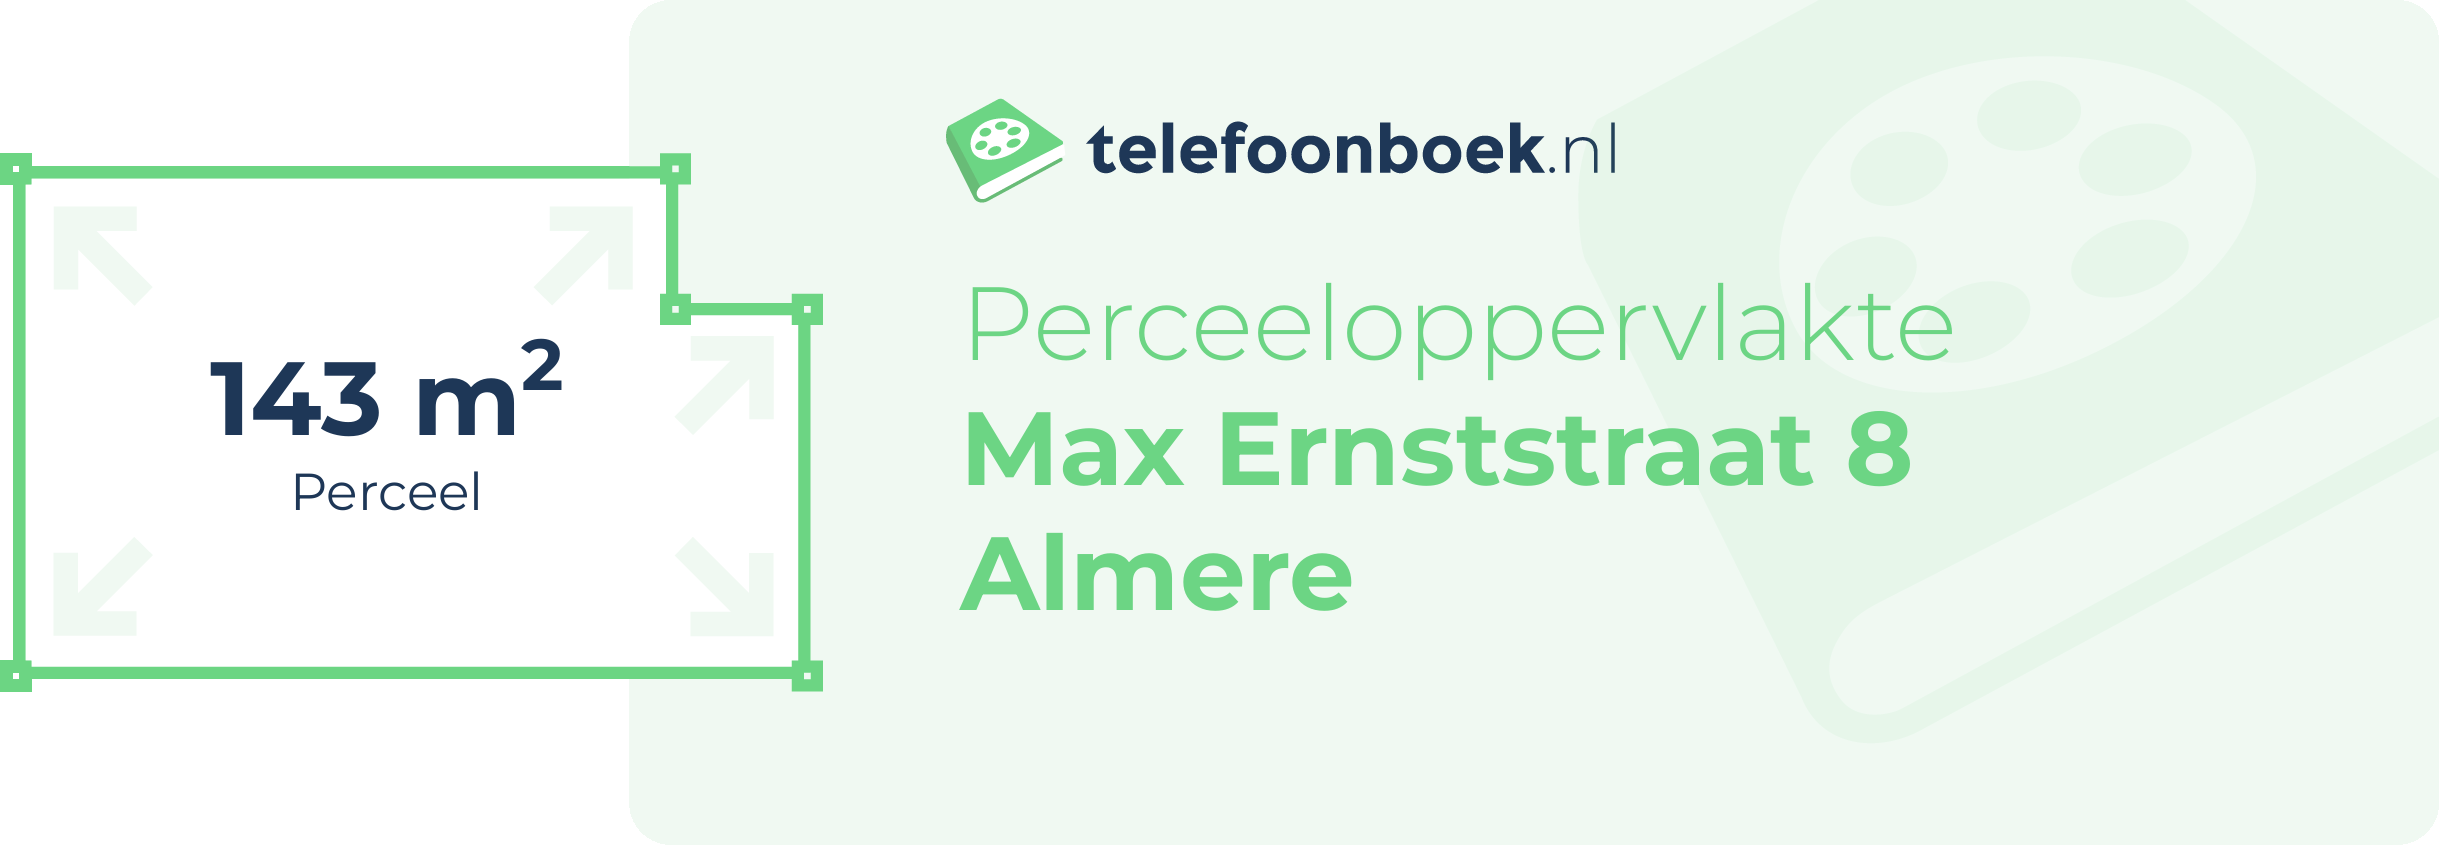 Perceeloppervlakte Max Ernststraat 8 Almere